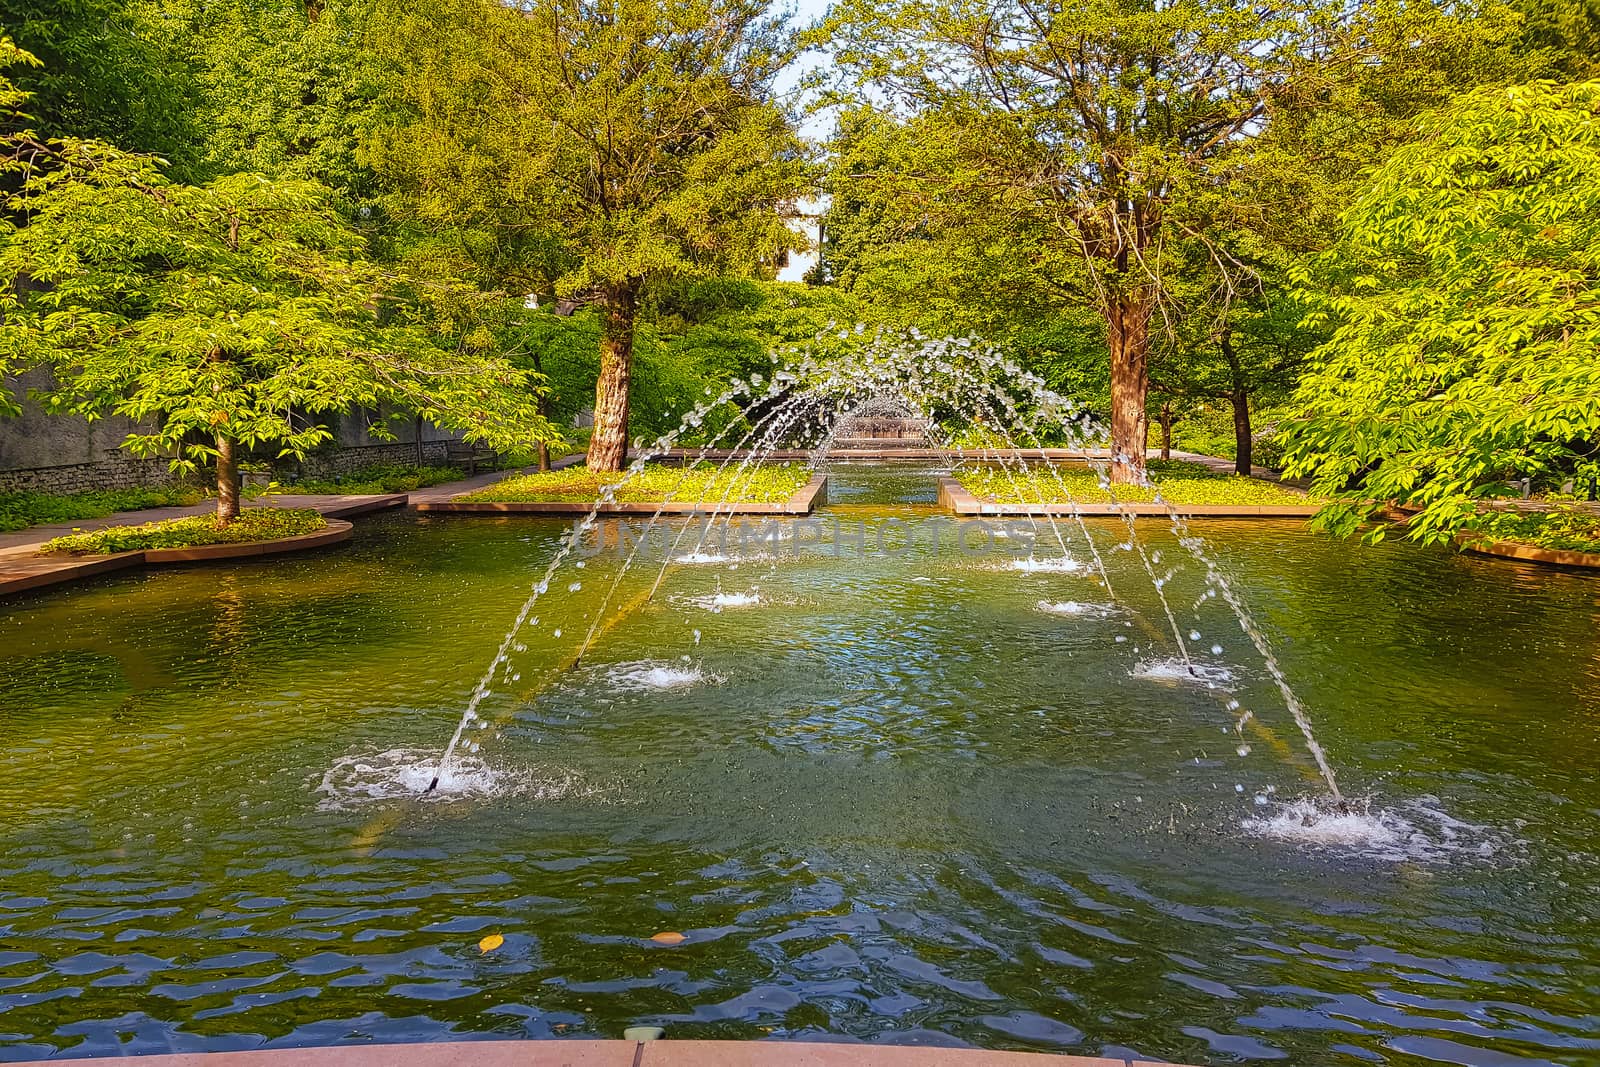 Castle park Fountain with ornamental garden by JFsPic